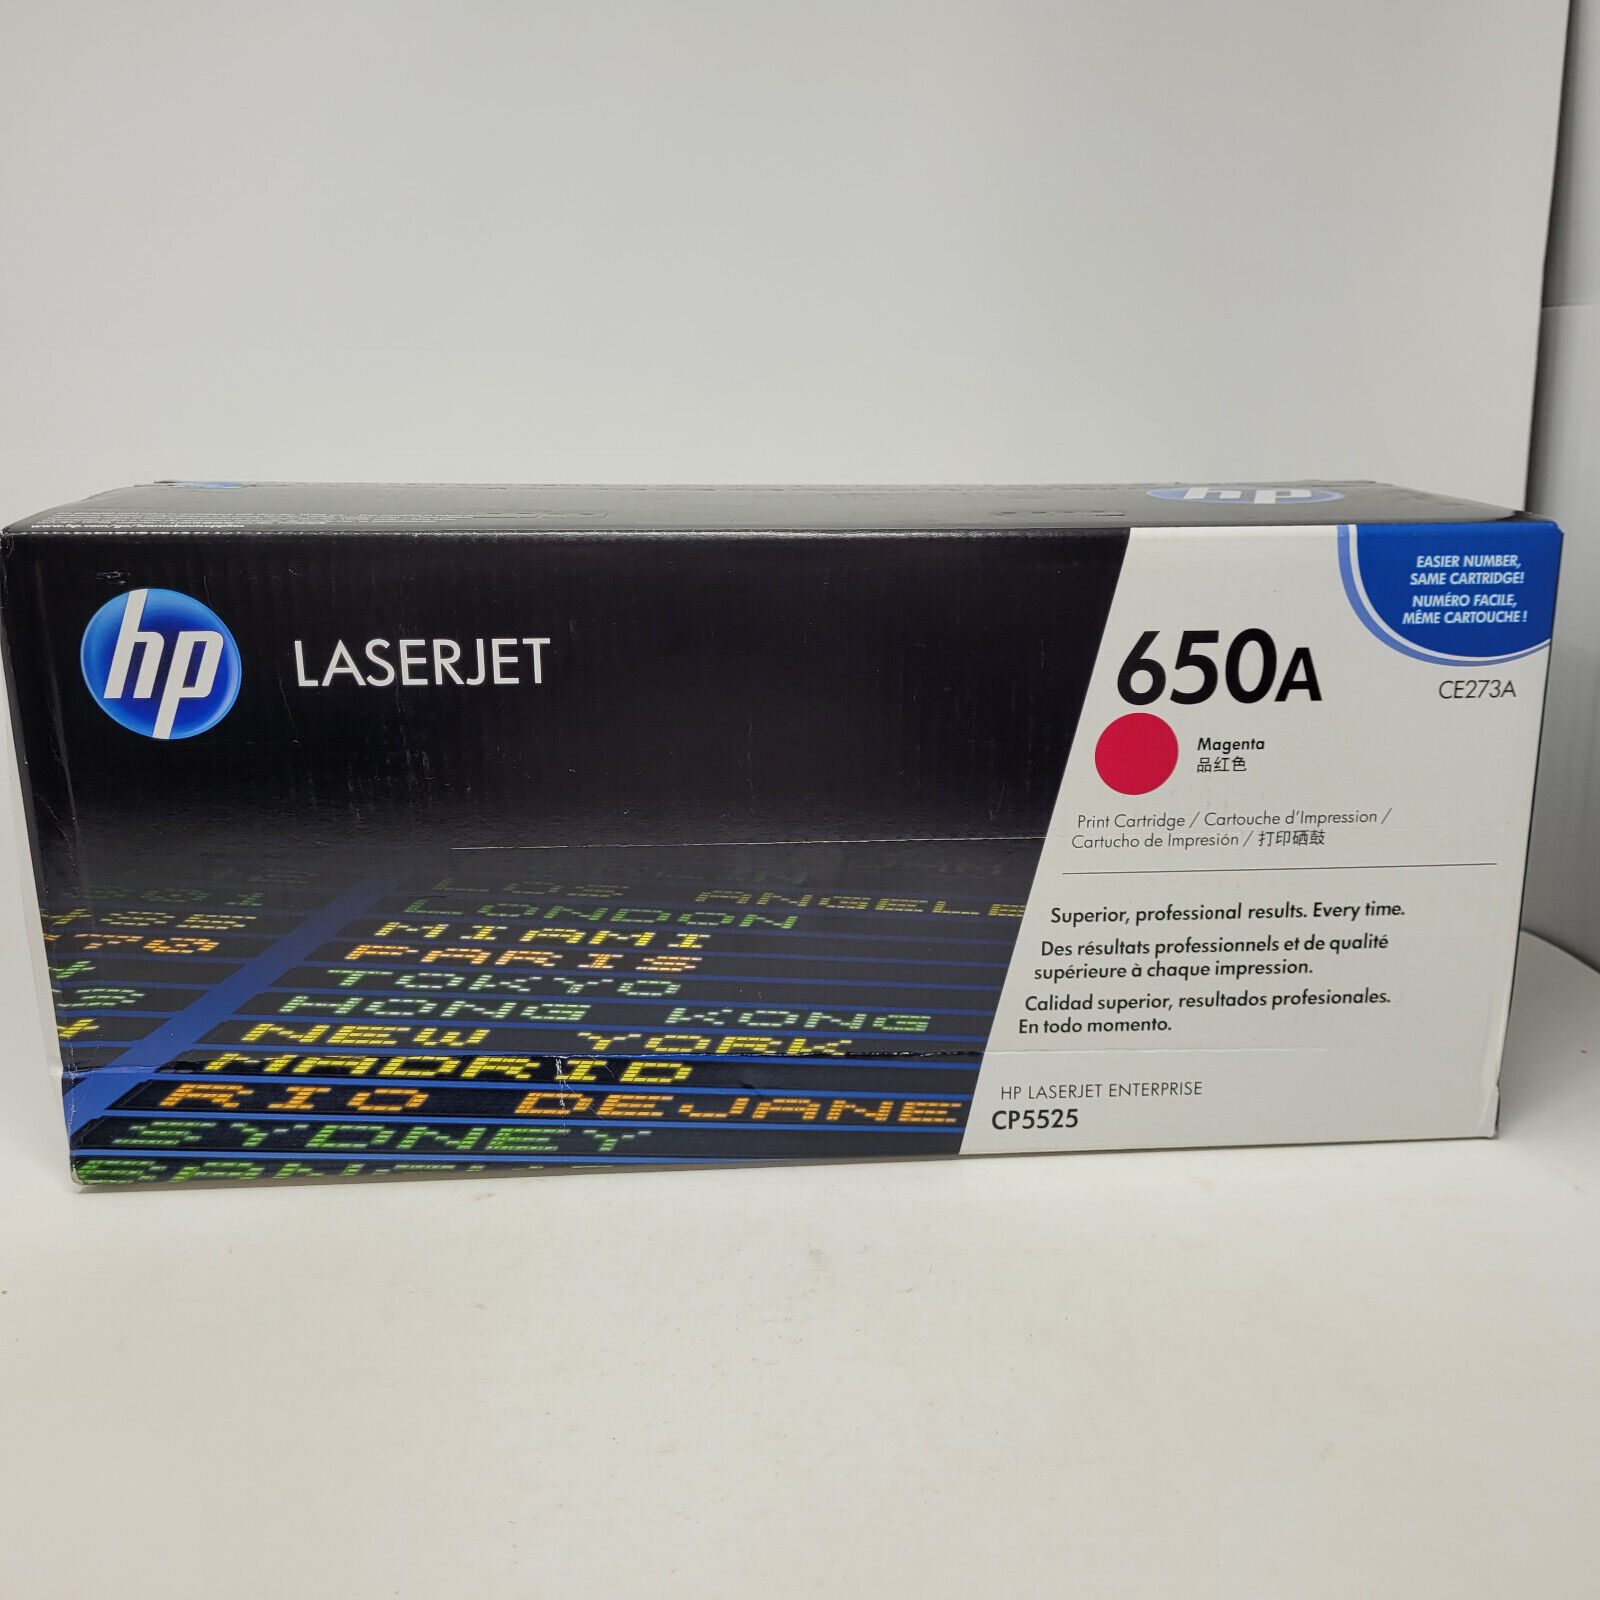 New Genuine HP LaserJet 650A Magenta CE273A Toner SEALED Box Wear